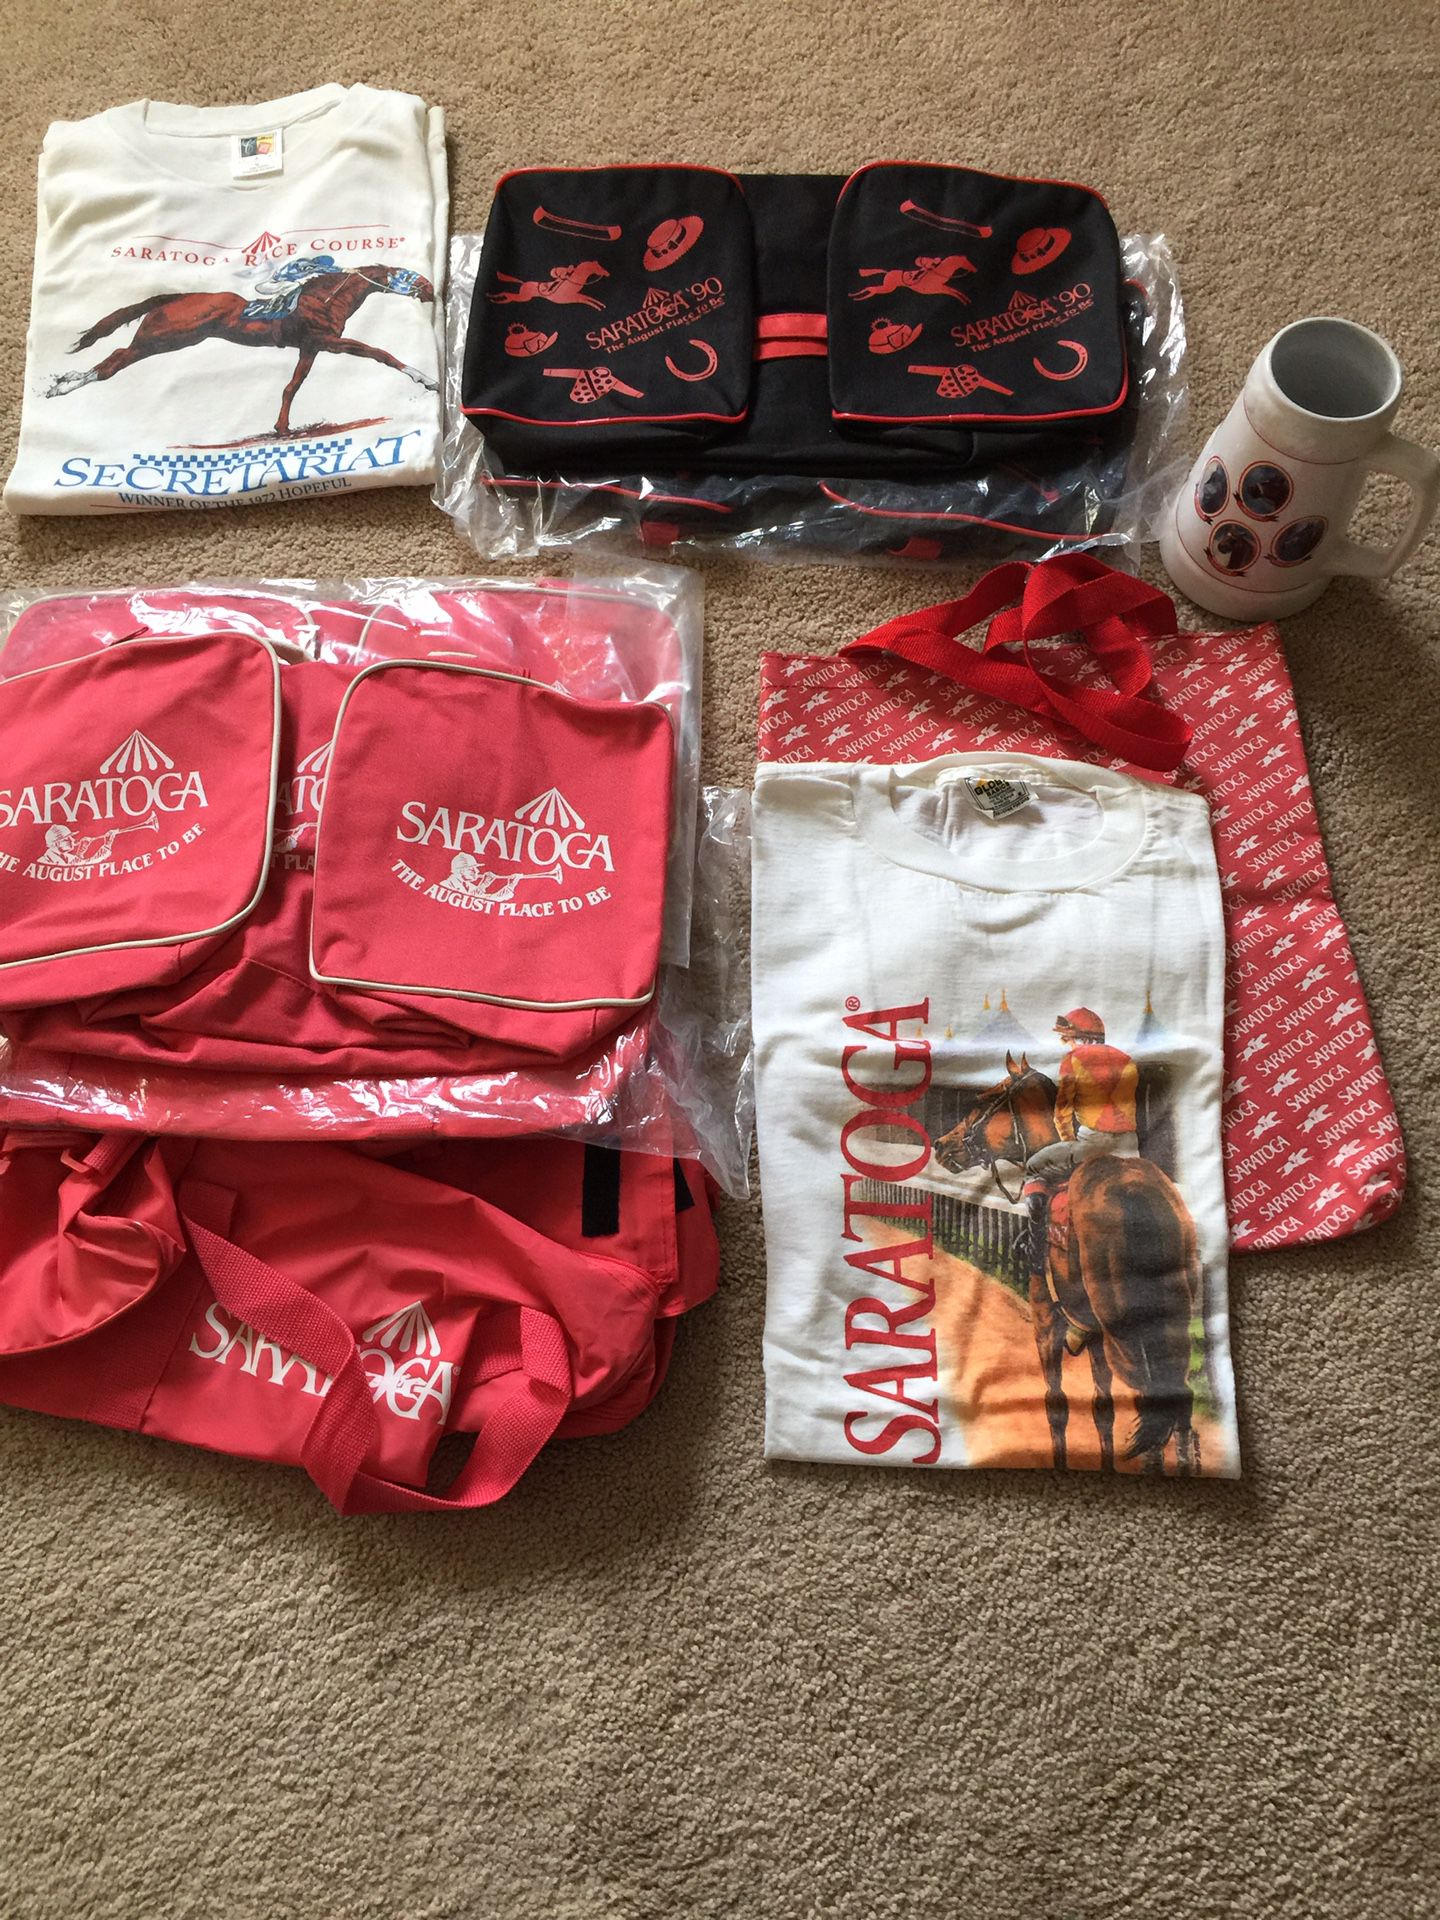 Saratoga Horse Racing items. Duffle and tote bags, tee shirts and mug.